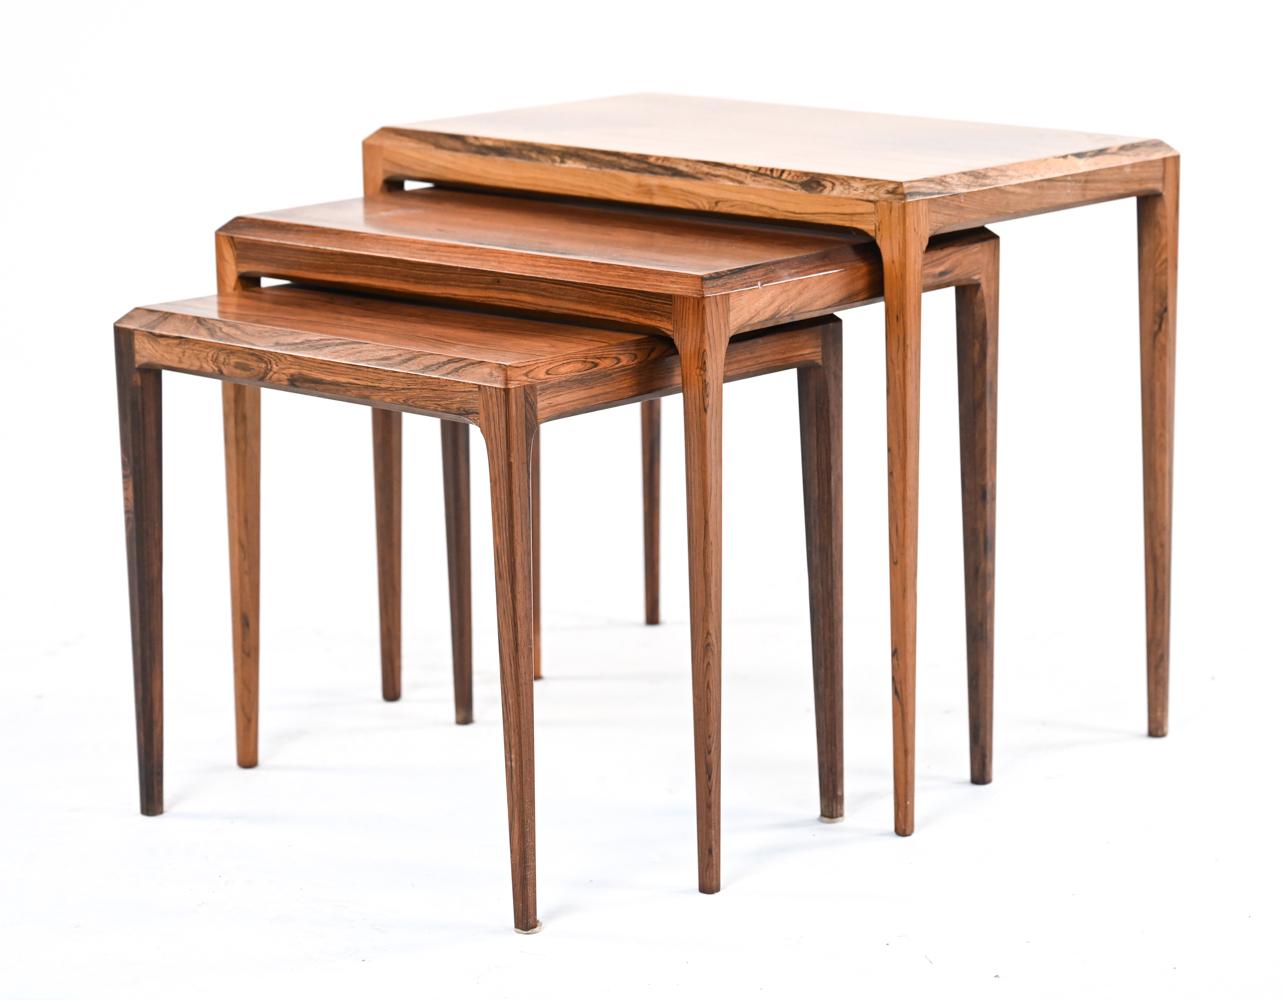 Set of 3 Rosewood Nesting Tables, Johannes Andersen for Silkeborg, c. 1960's For Sale 1